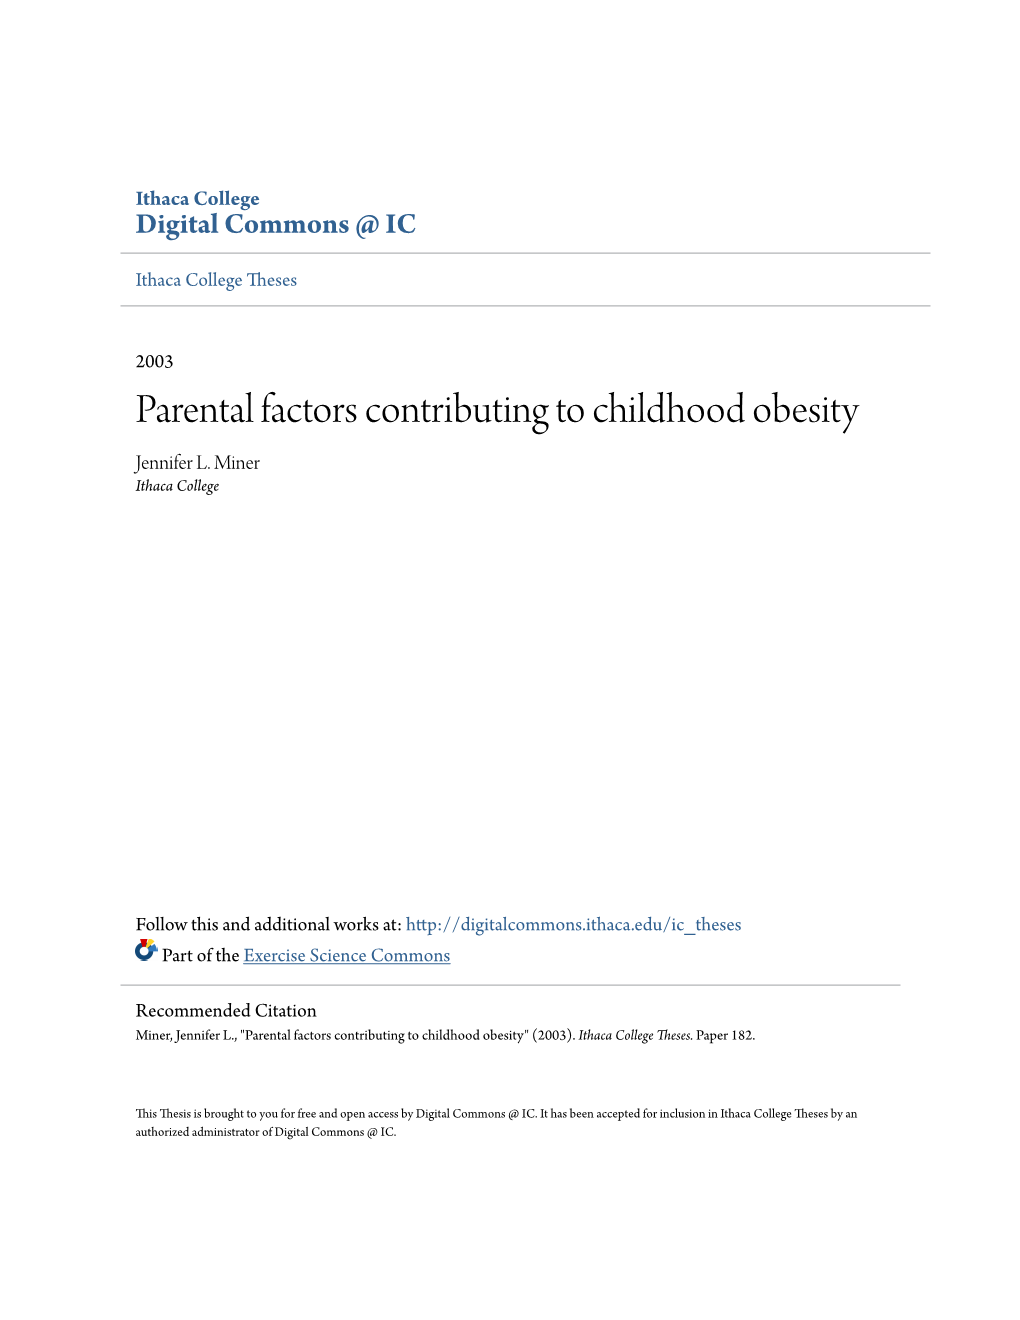 Parental Factors Contributing to Childhood Obesity Jennifer L